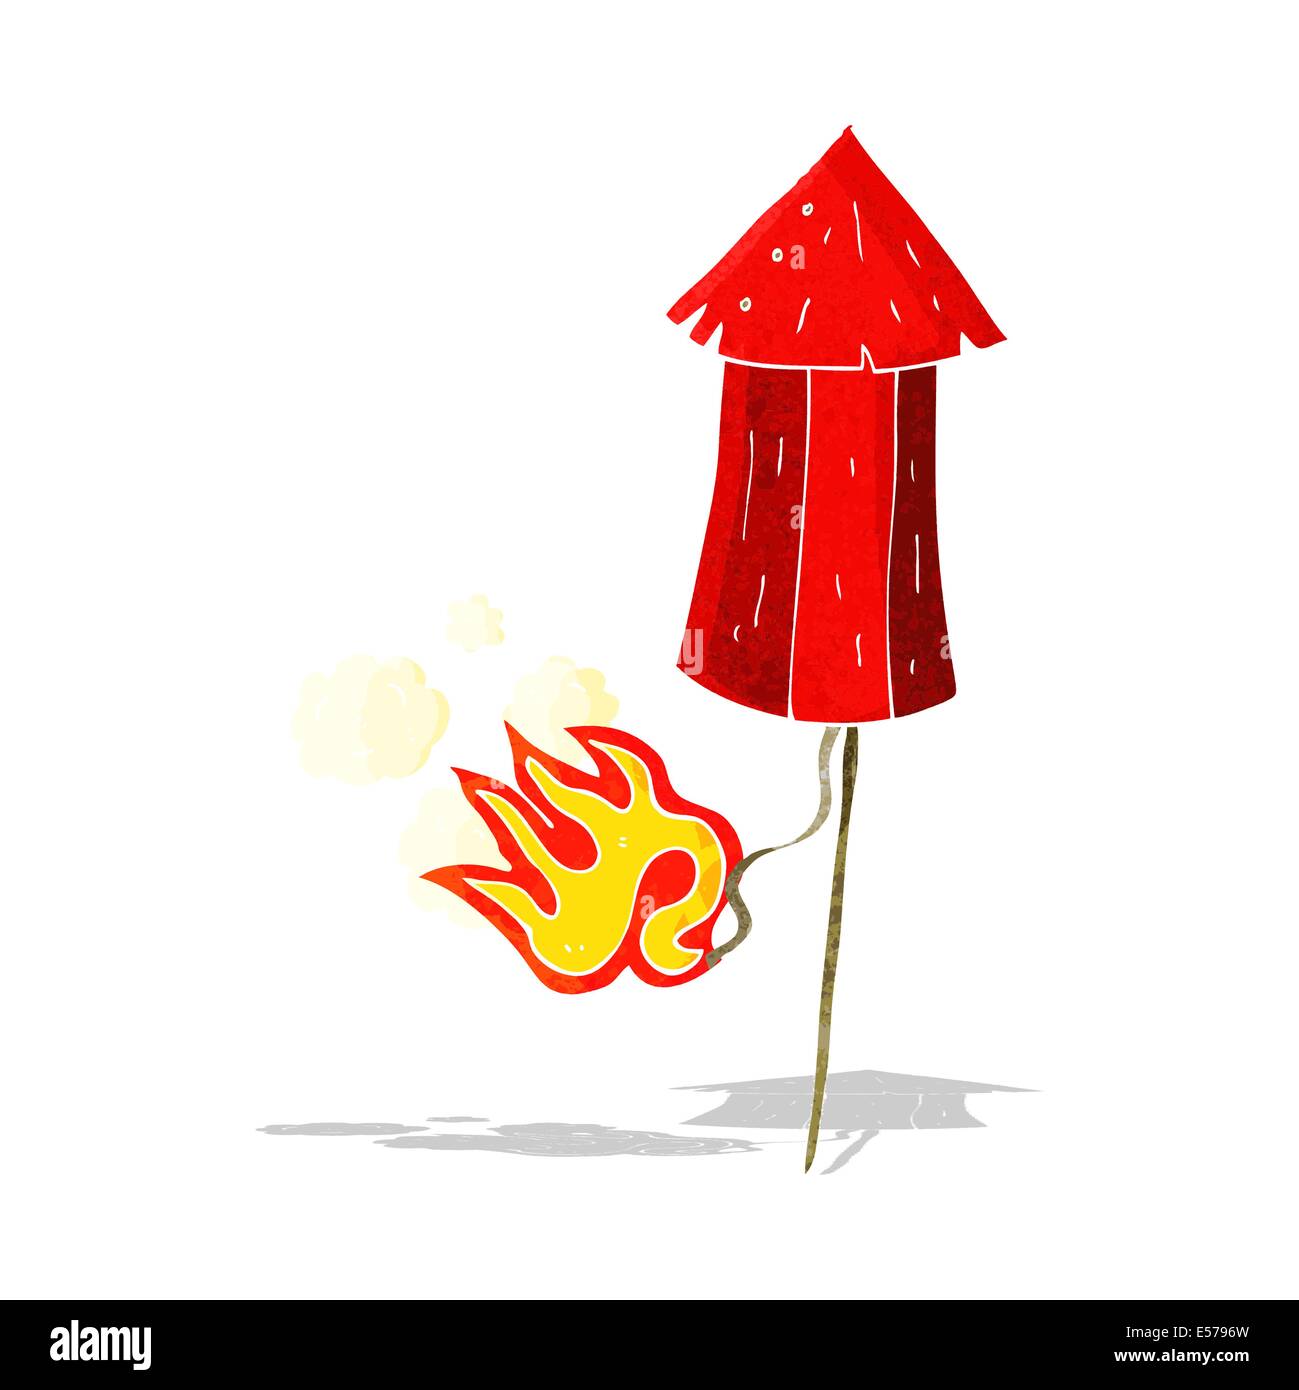 chinese firecrackers cartoon